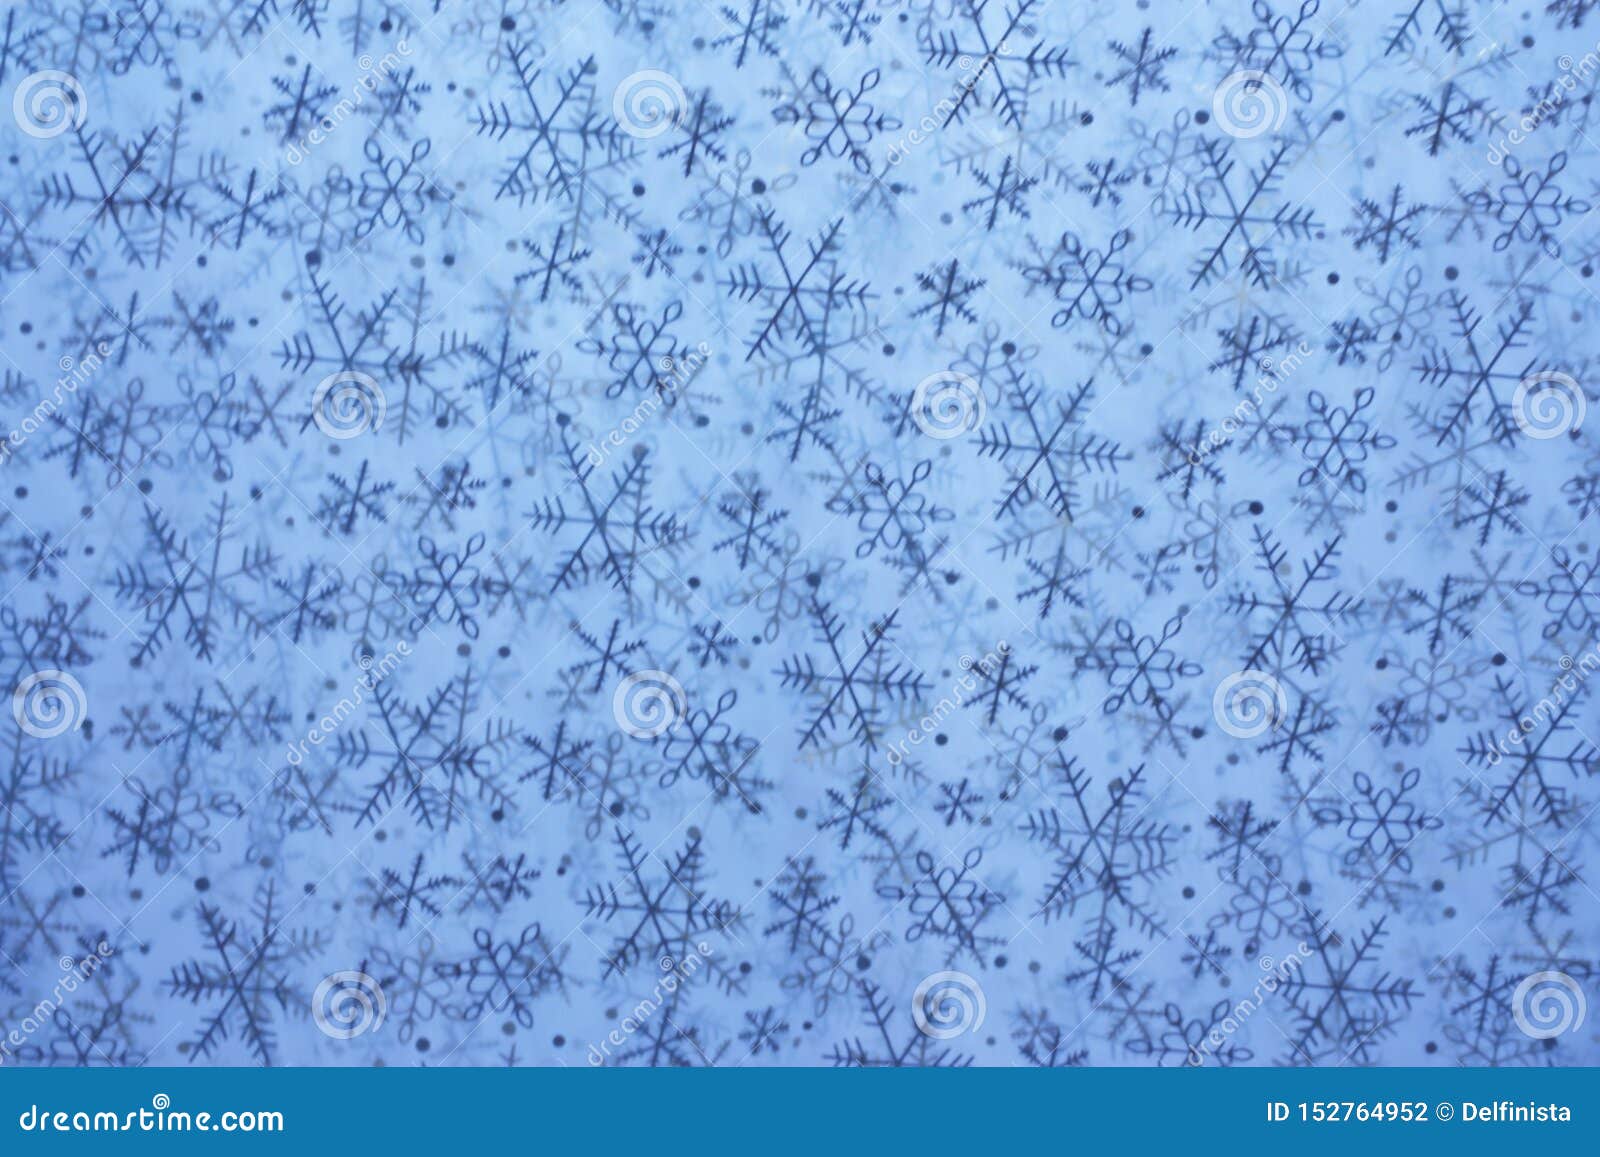 Snowflake Wallpaper - NawPic